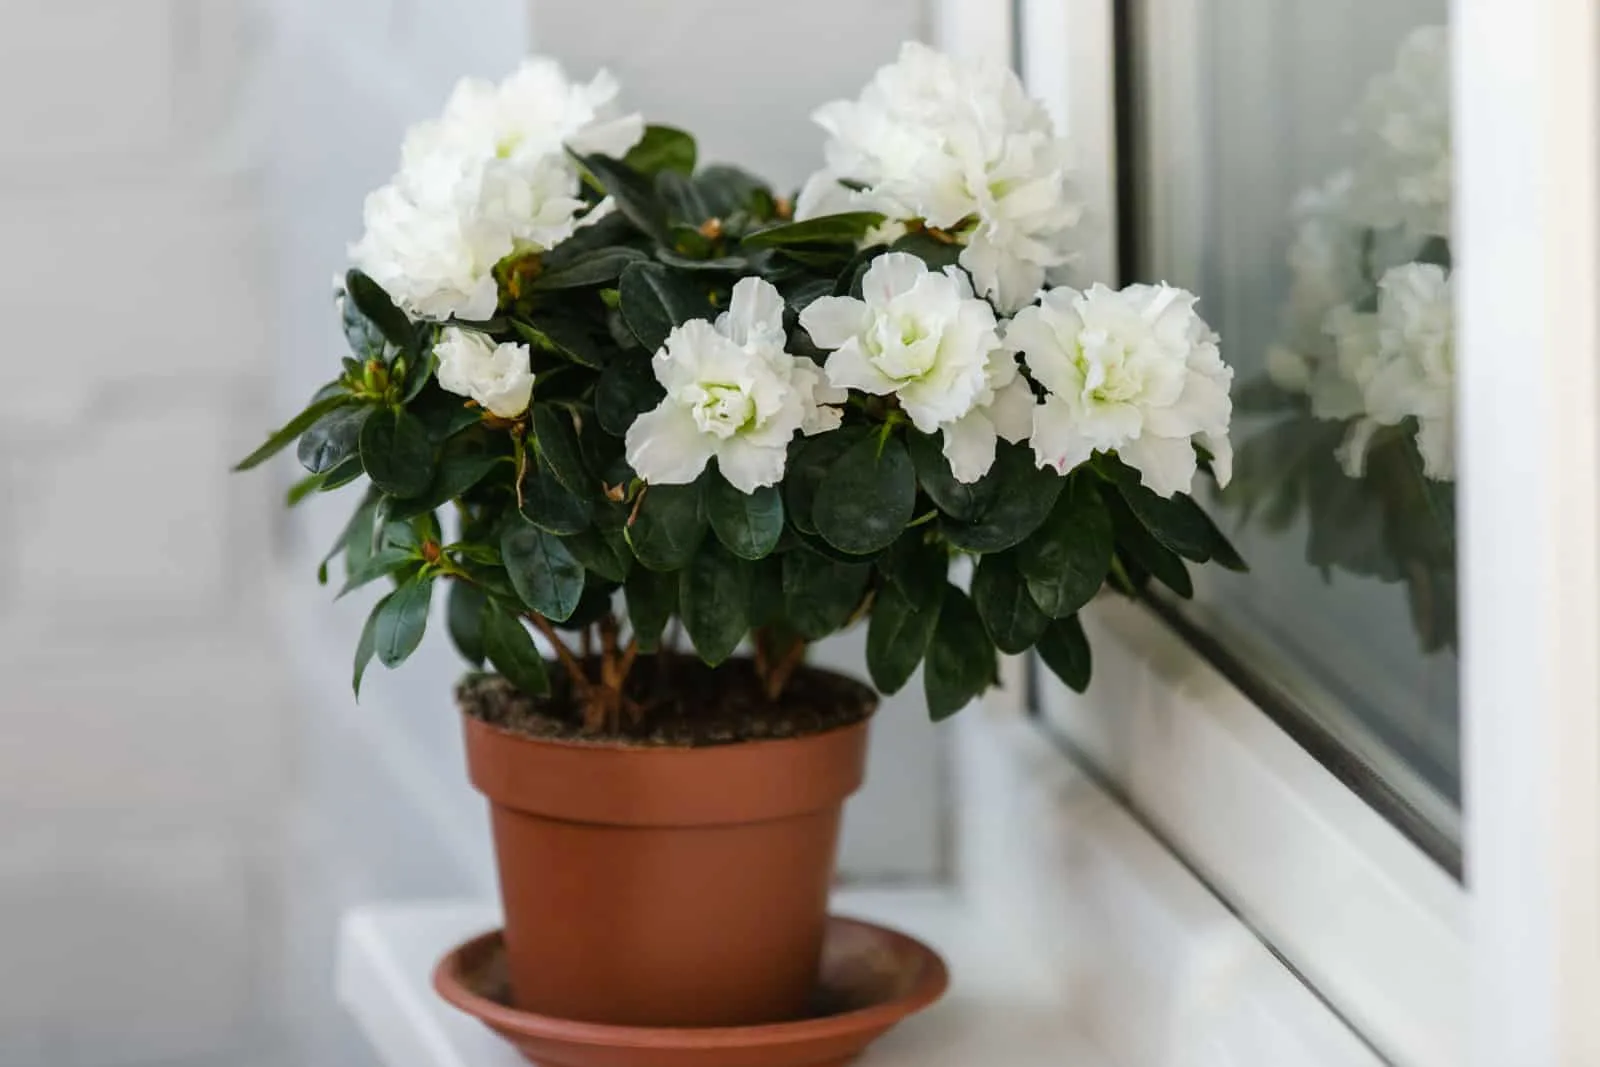 White azalea in a brown flowerpot on the windowsill blooms profusely